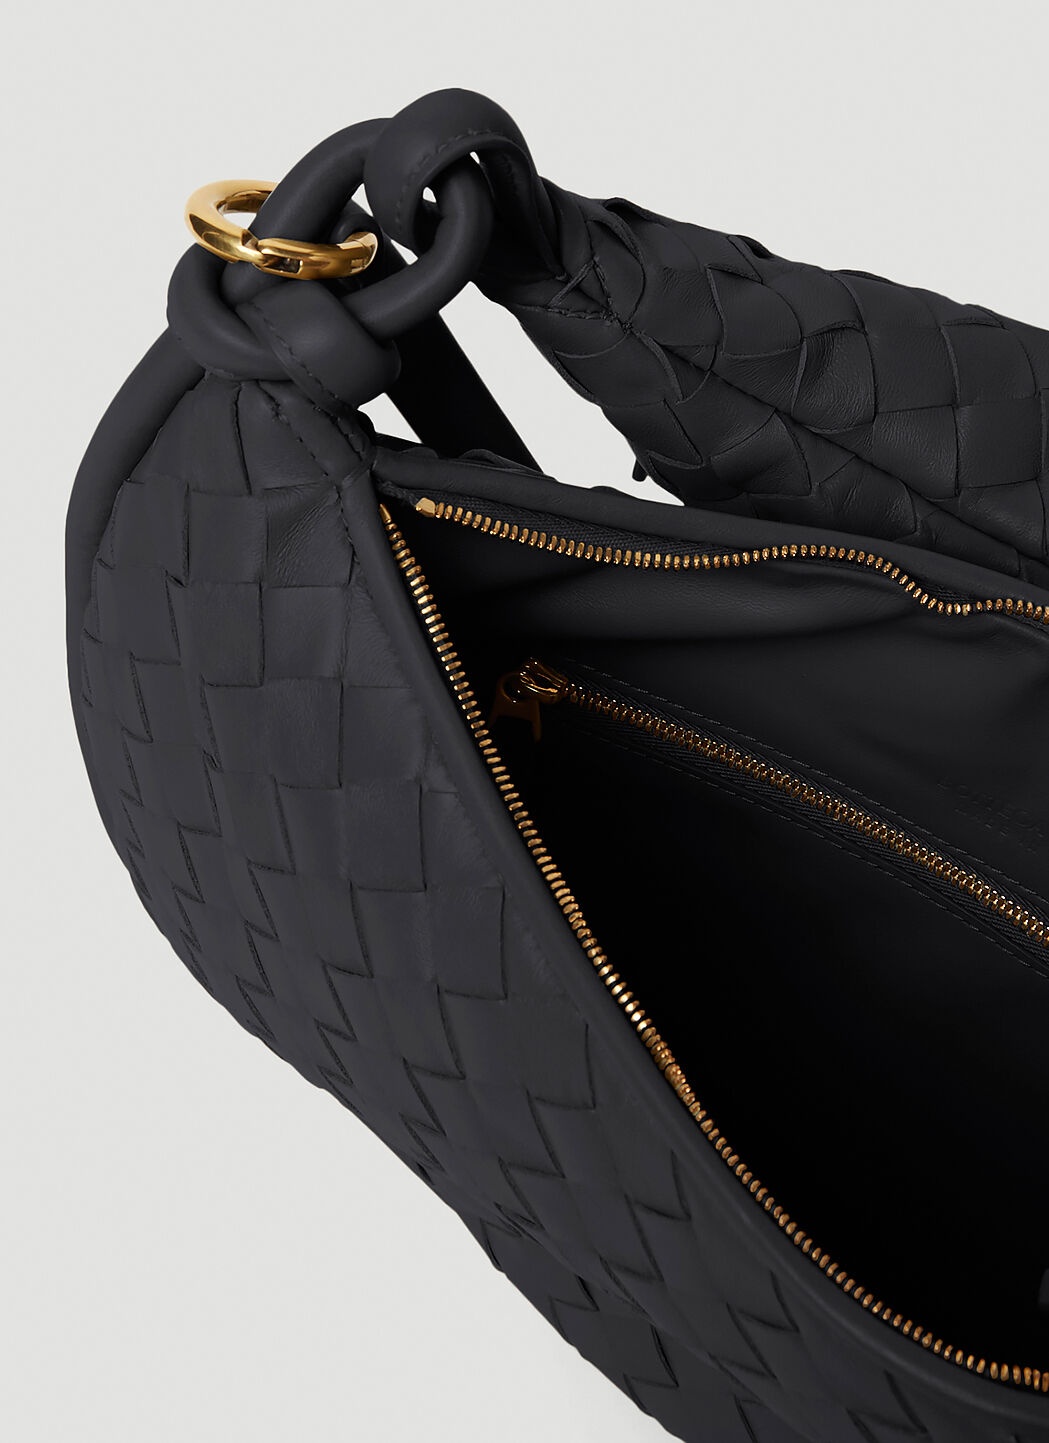 Bottega Veneta's Gemelli Bag Is the Next It Style